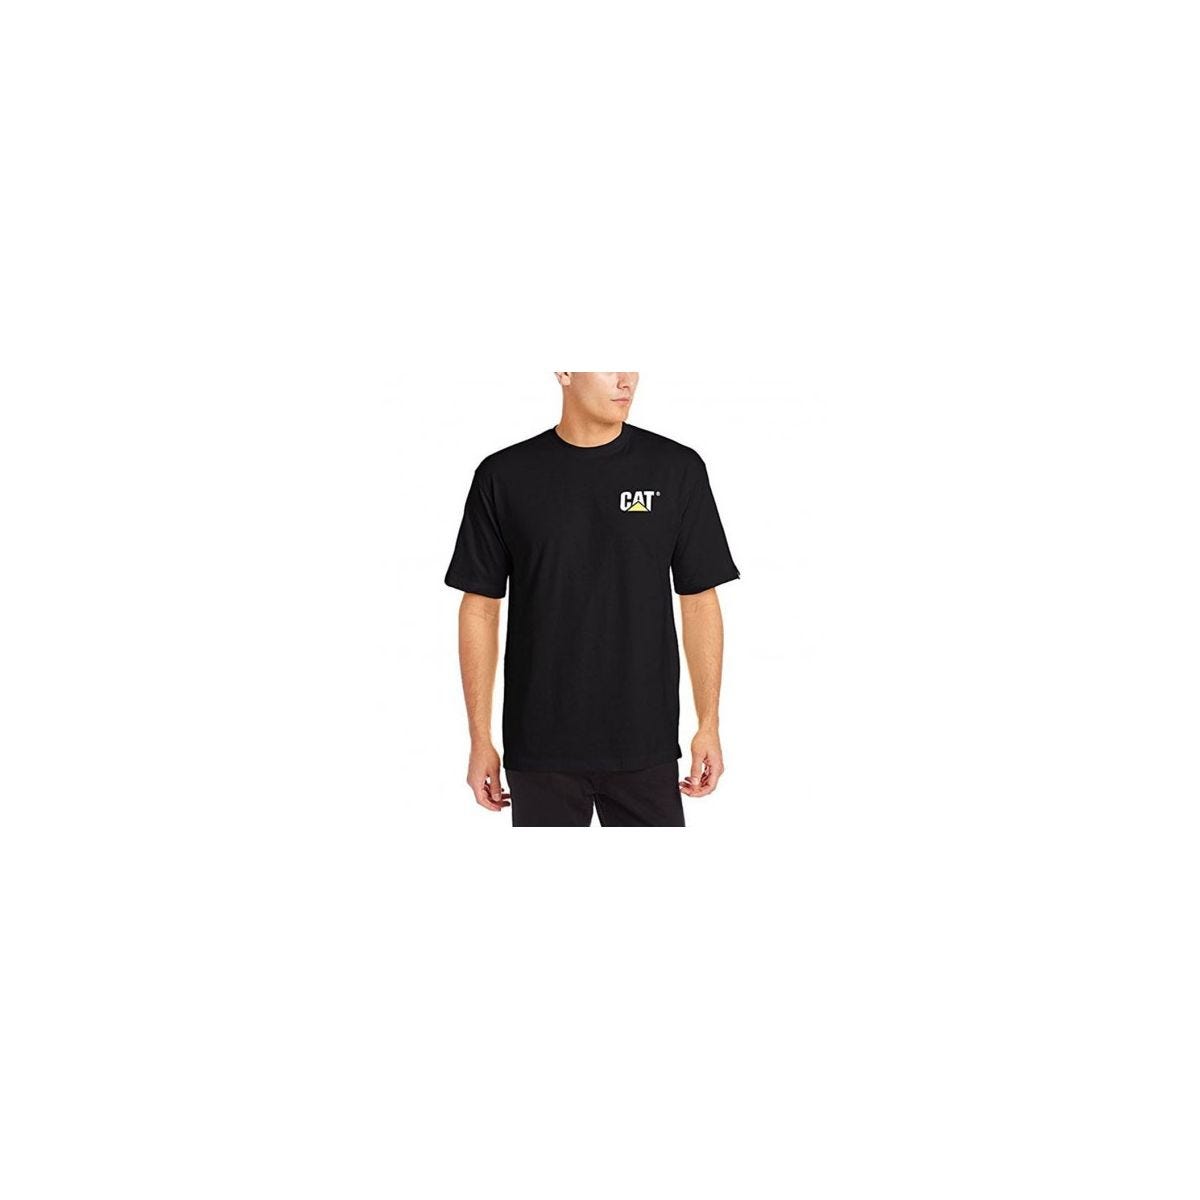 Tee-Shirt coton TRADEMARK W05324 Noir - Caterpillar - Taille XL 0